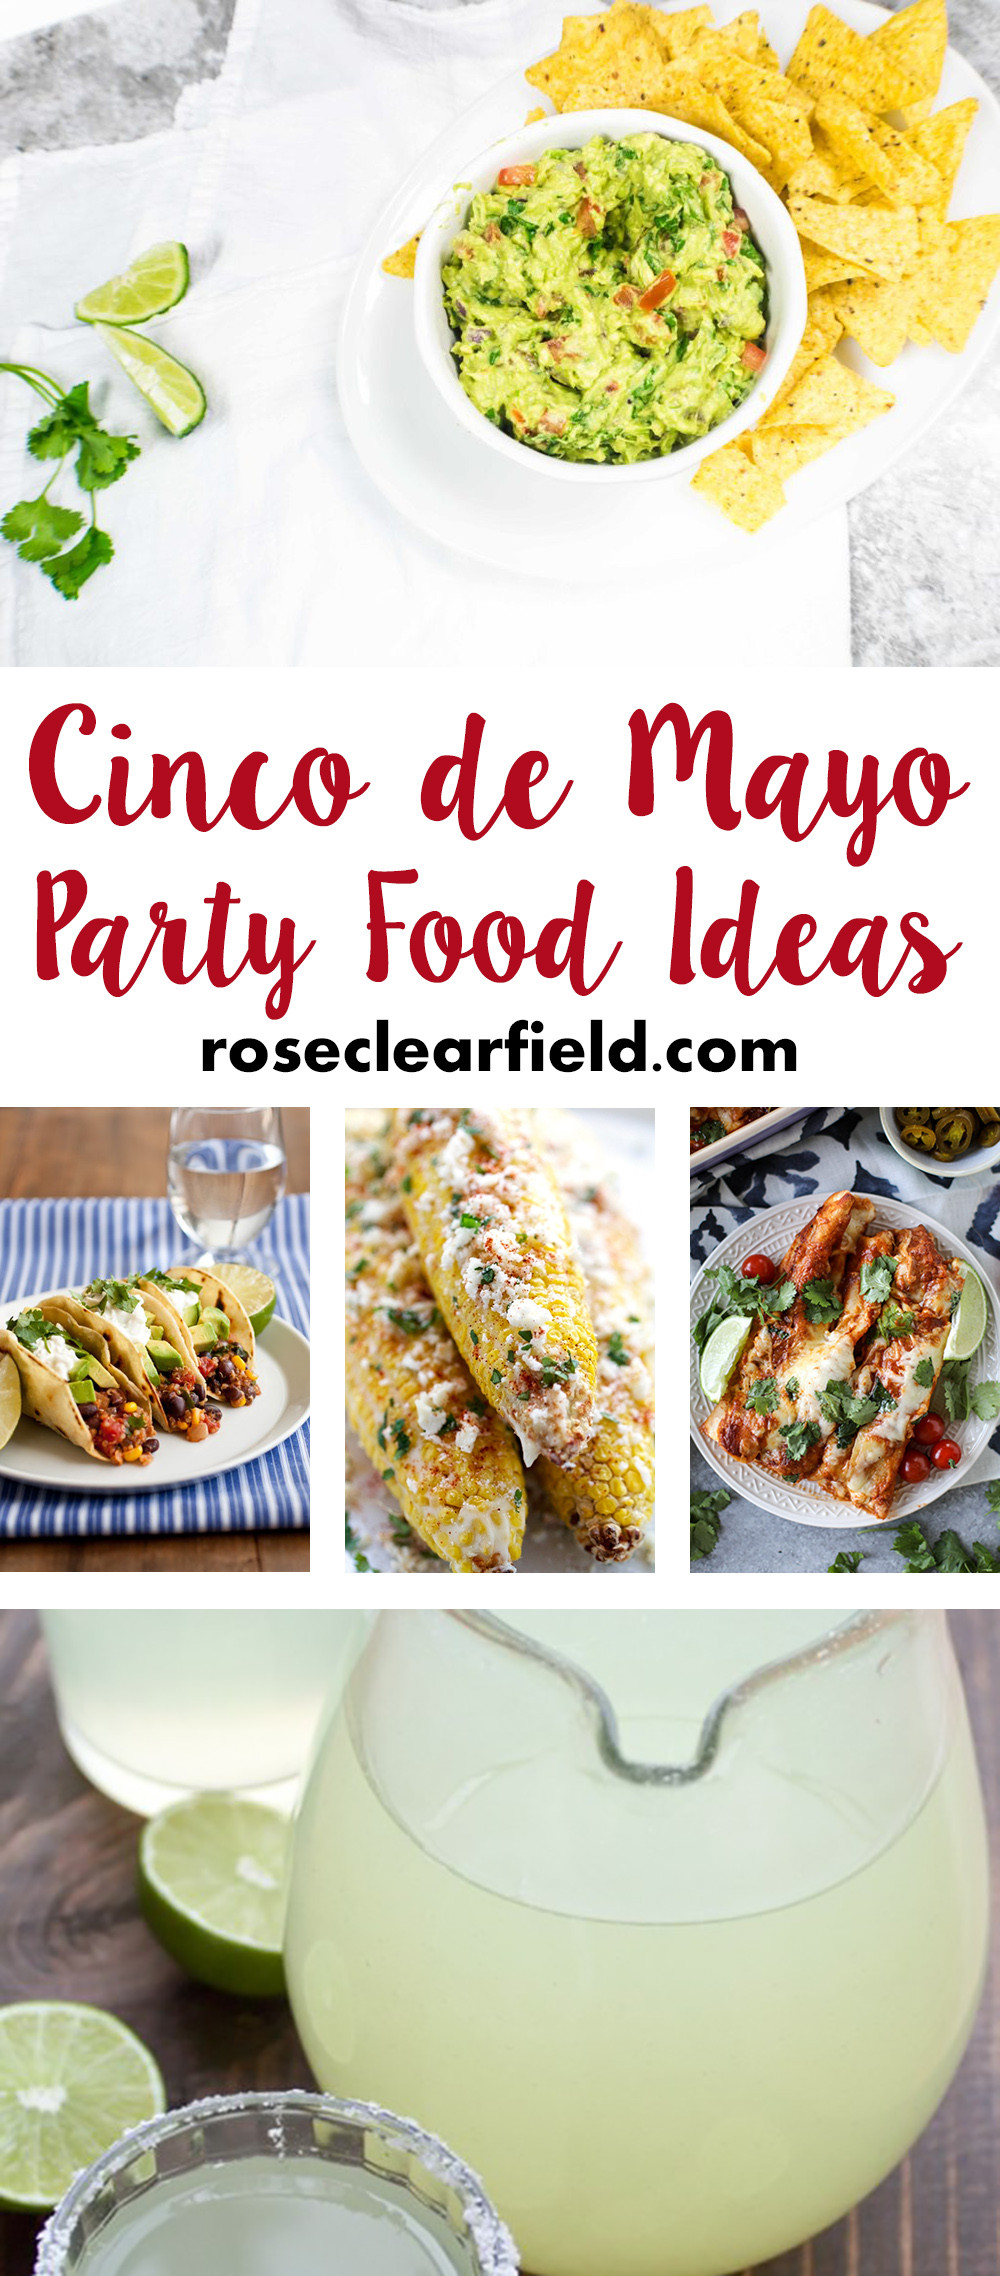 Cinco De Mayo Celebration Ideas
 Cinco de Mayo Party Food Ideas • Rose Clearfield